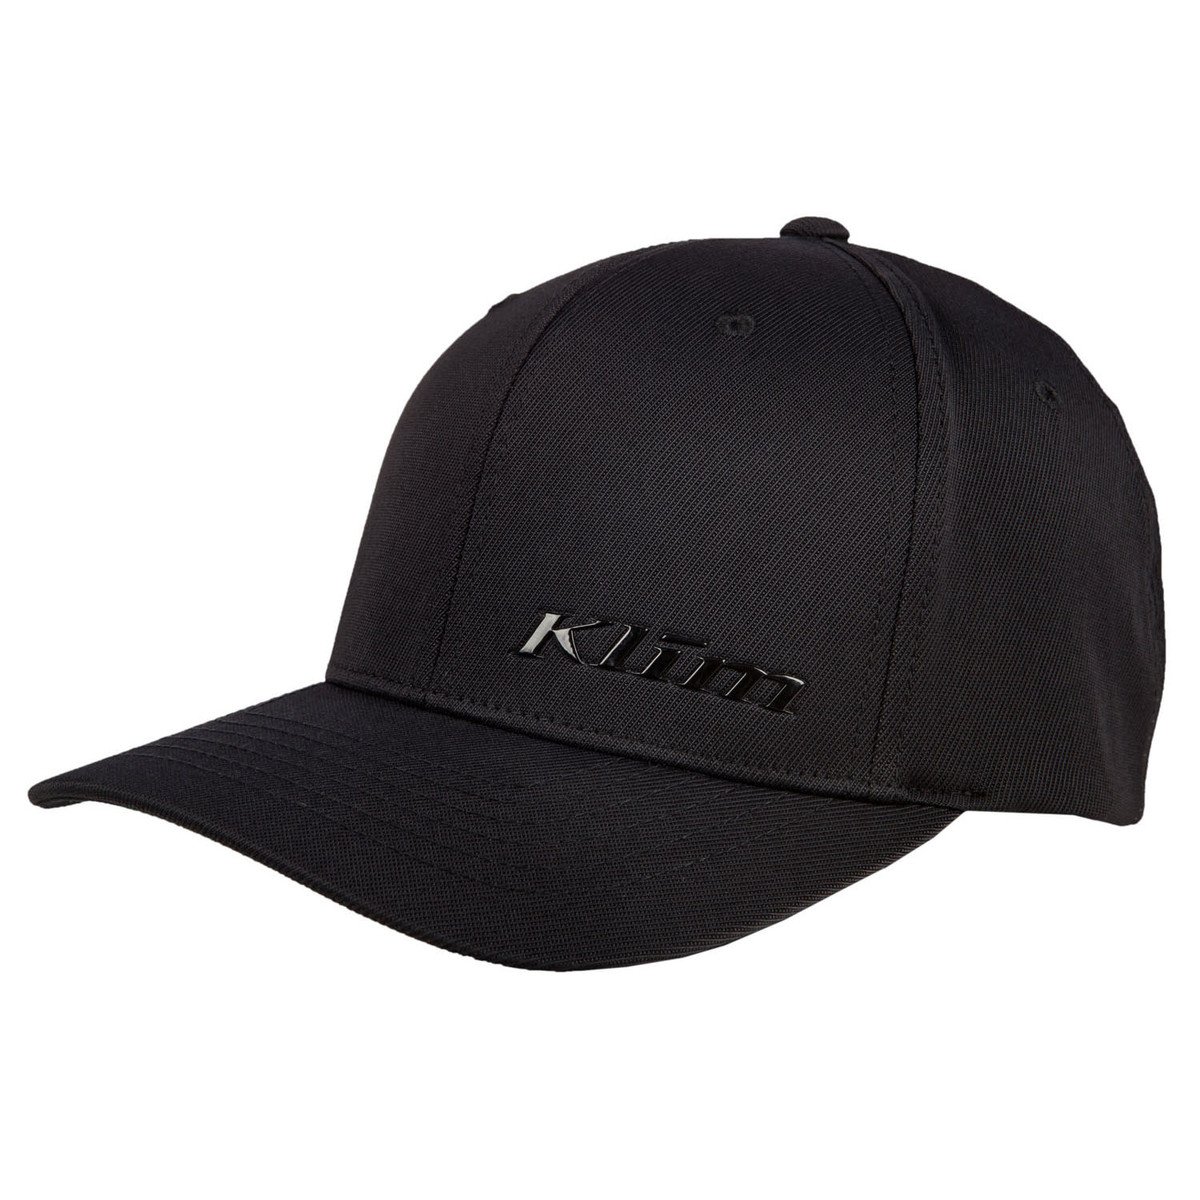 (Black) Hat Klim Fit Stealth Flex